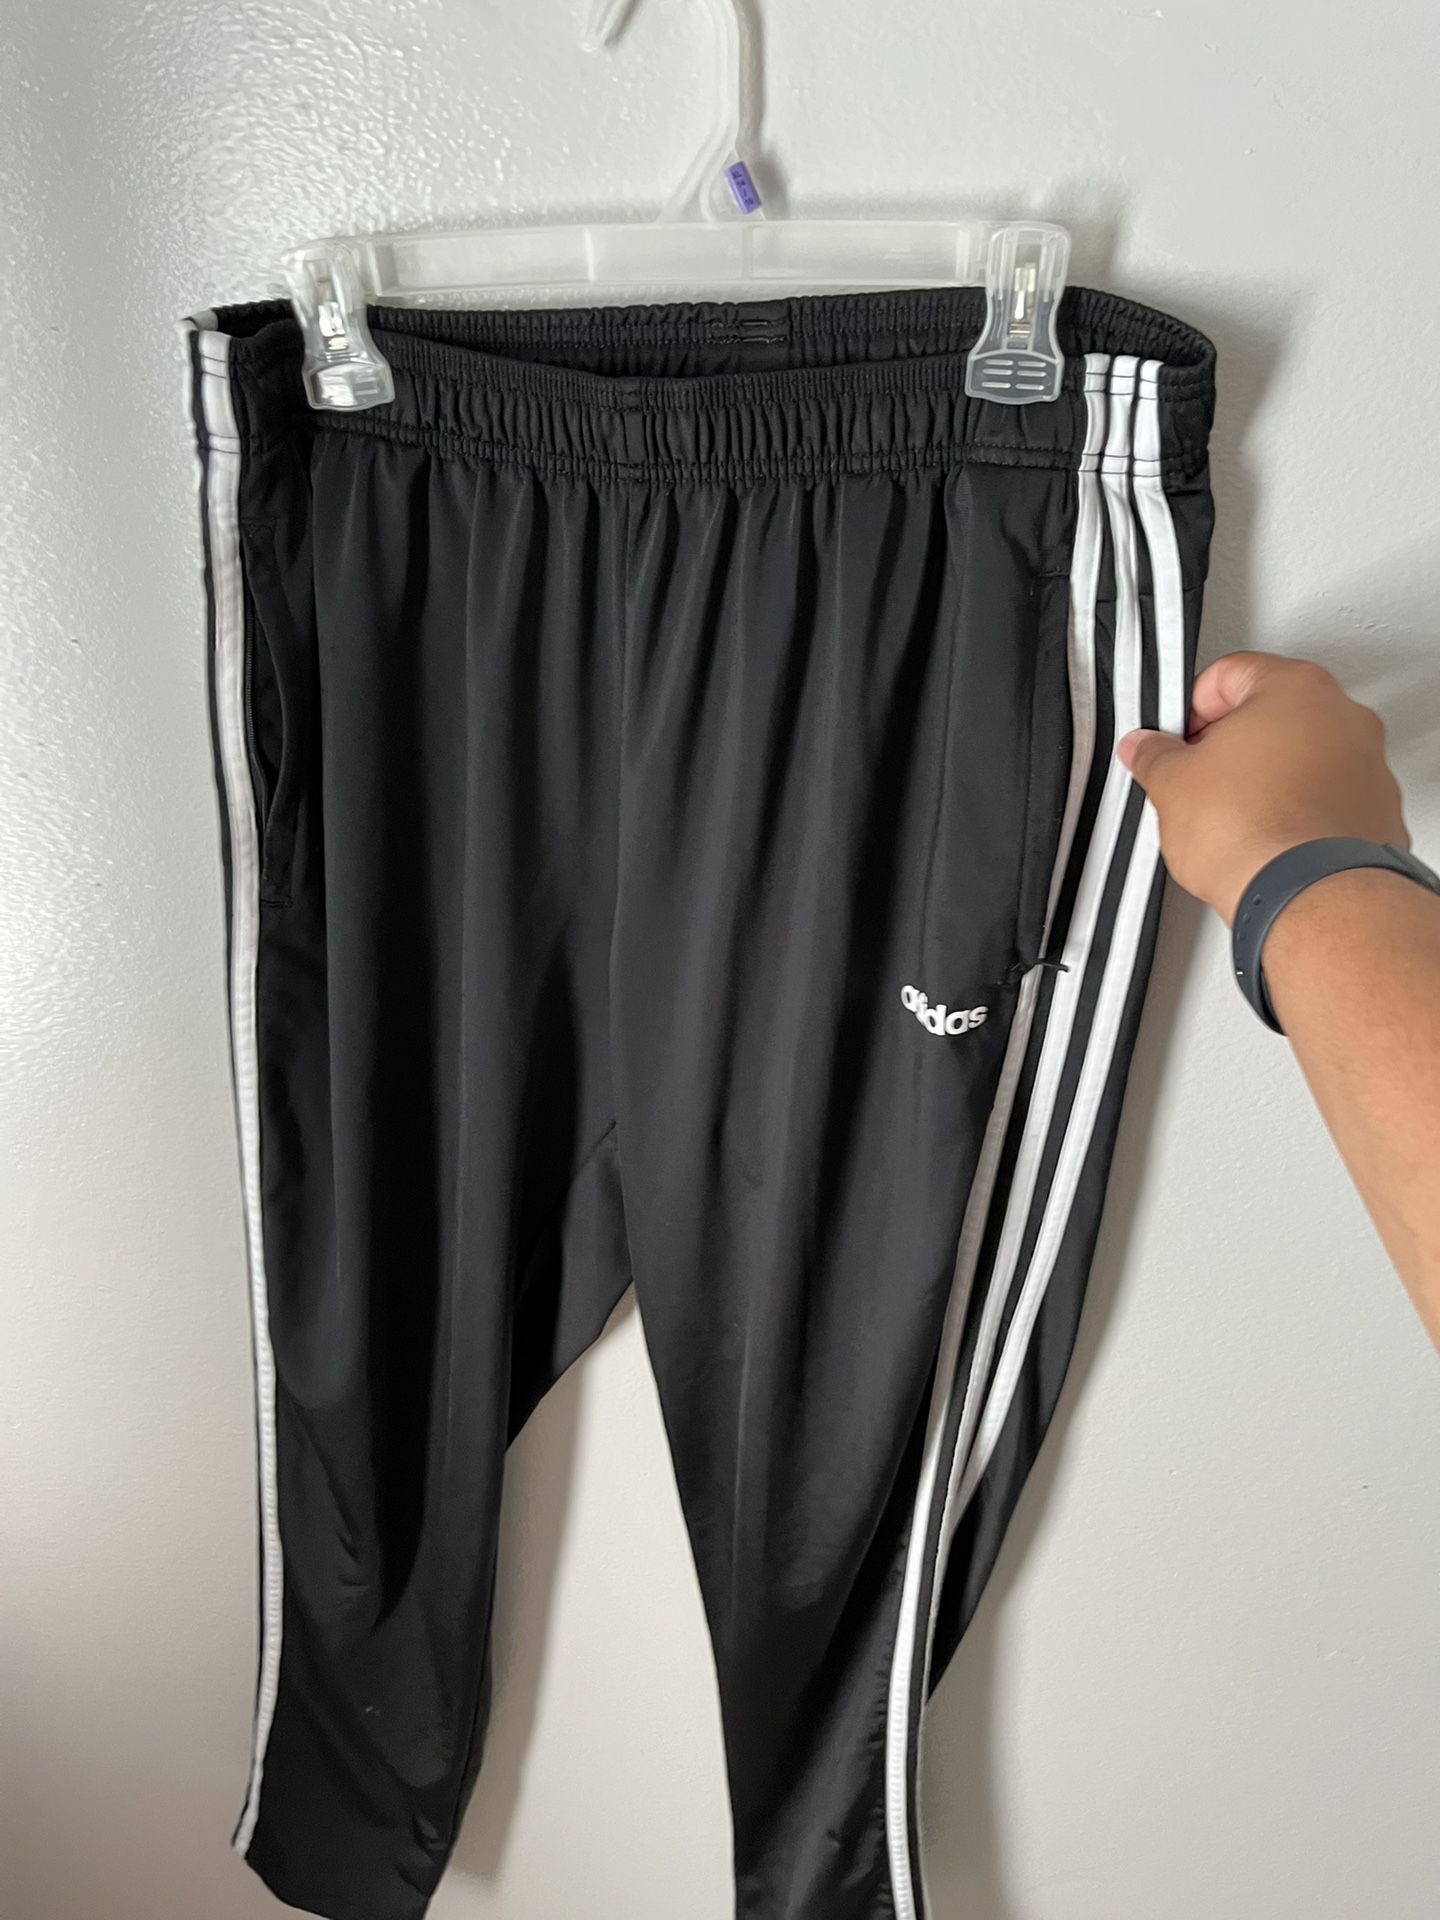 Black Adidas Joggers Pants $10 Size: Large